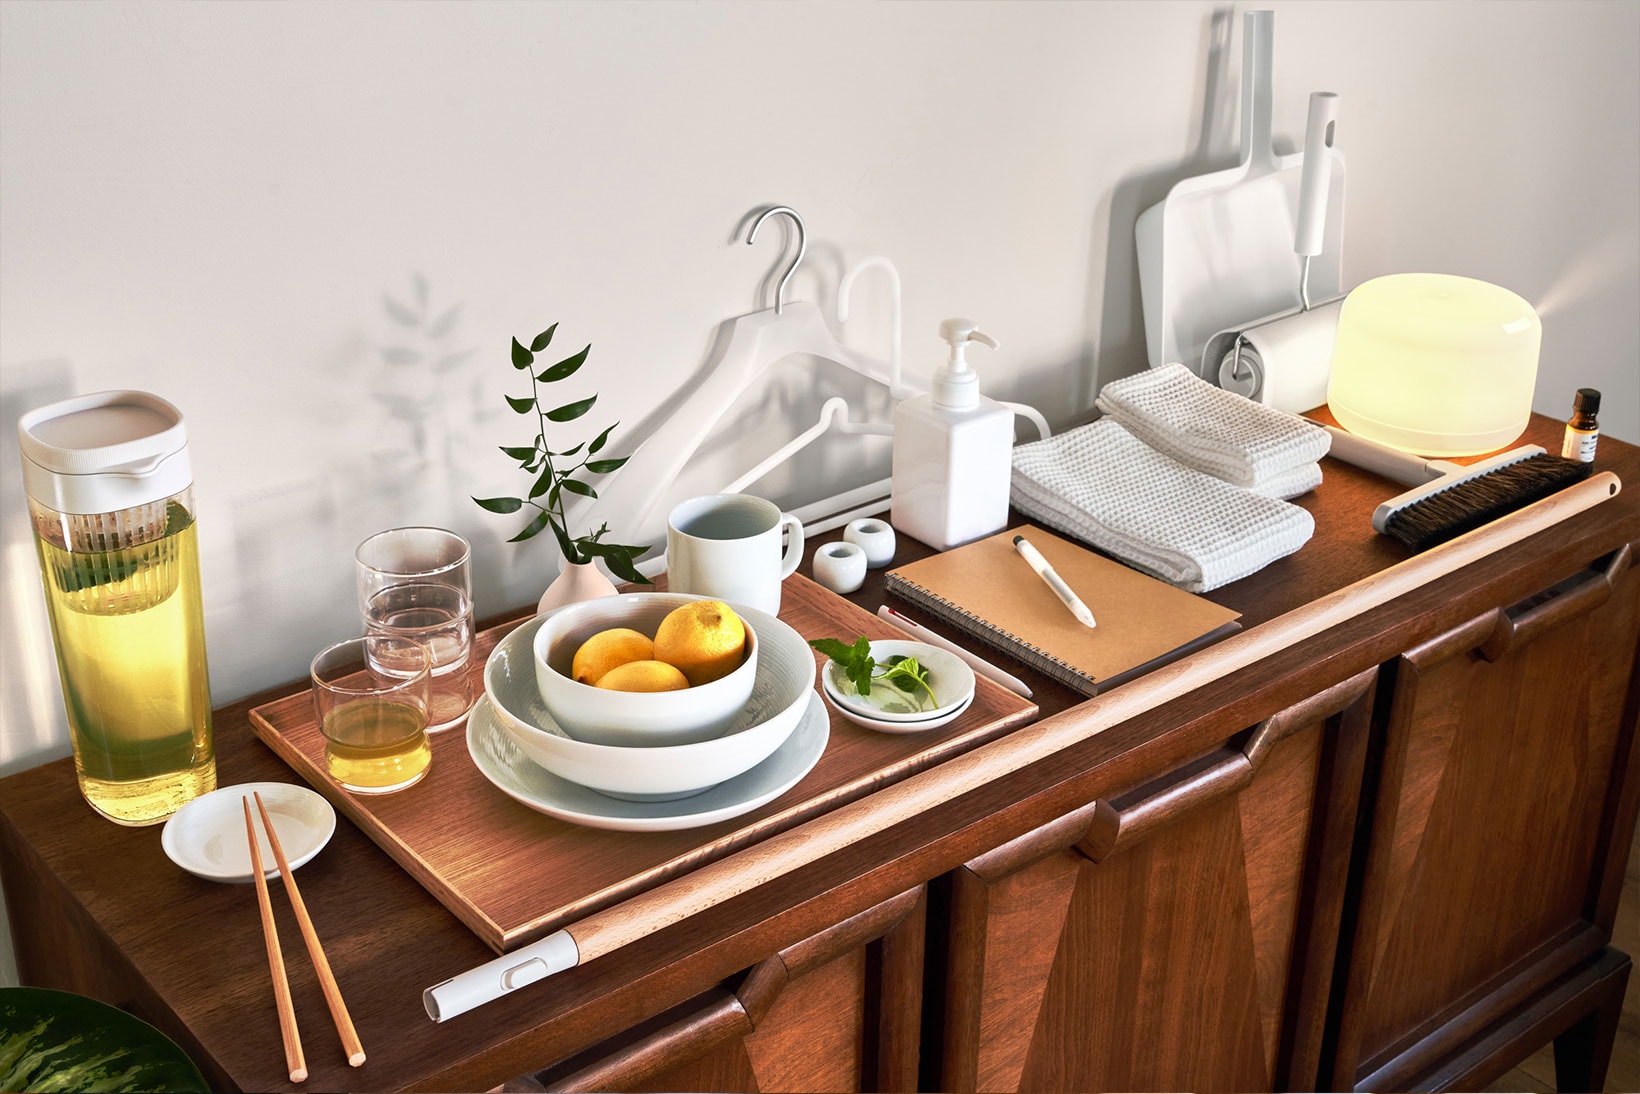 muji airbnb host essentials home cutlery bowls